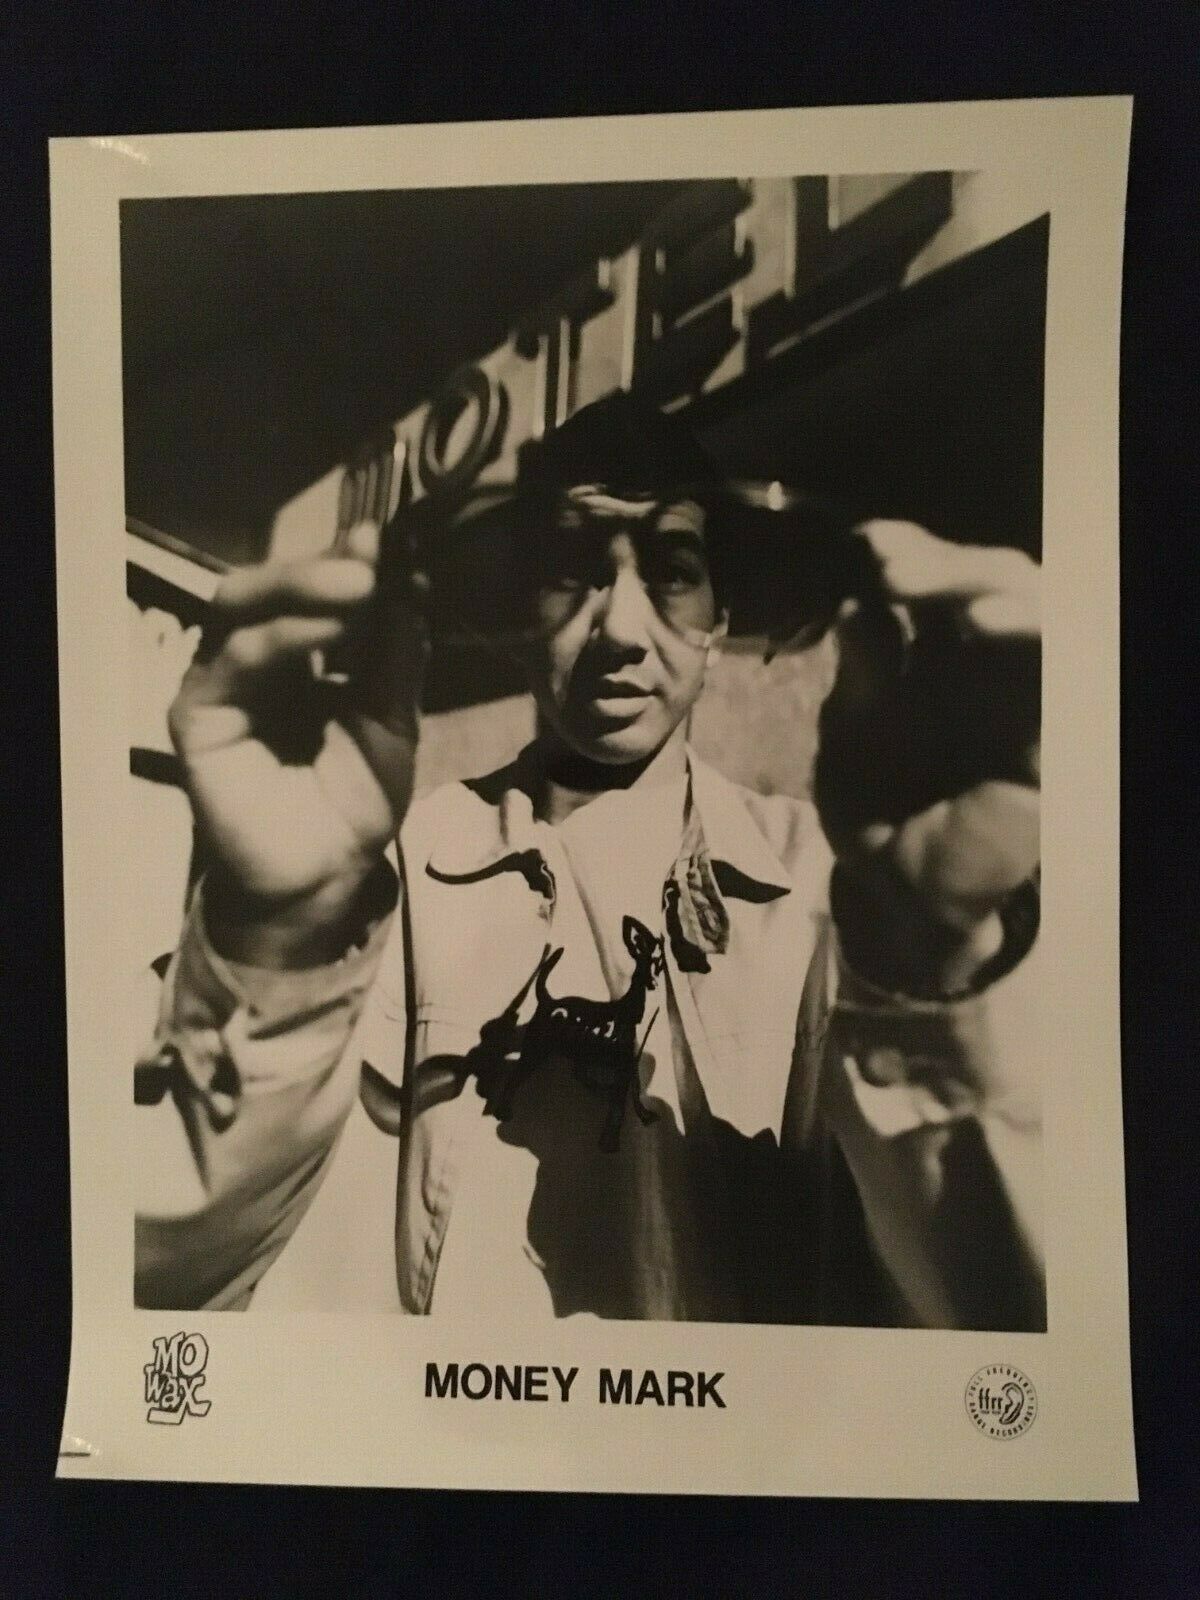 1995 FFRR Money Mark Press Kit Promo Photo.jpg